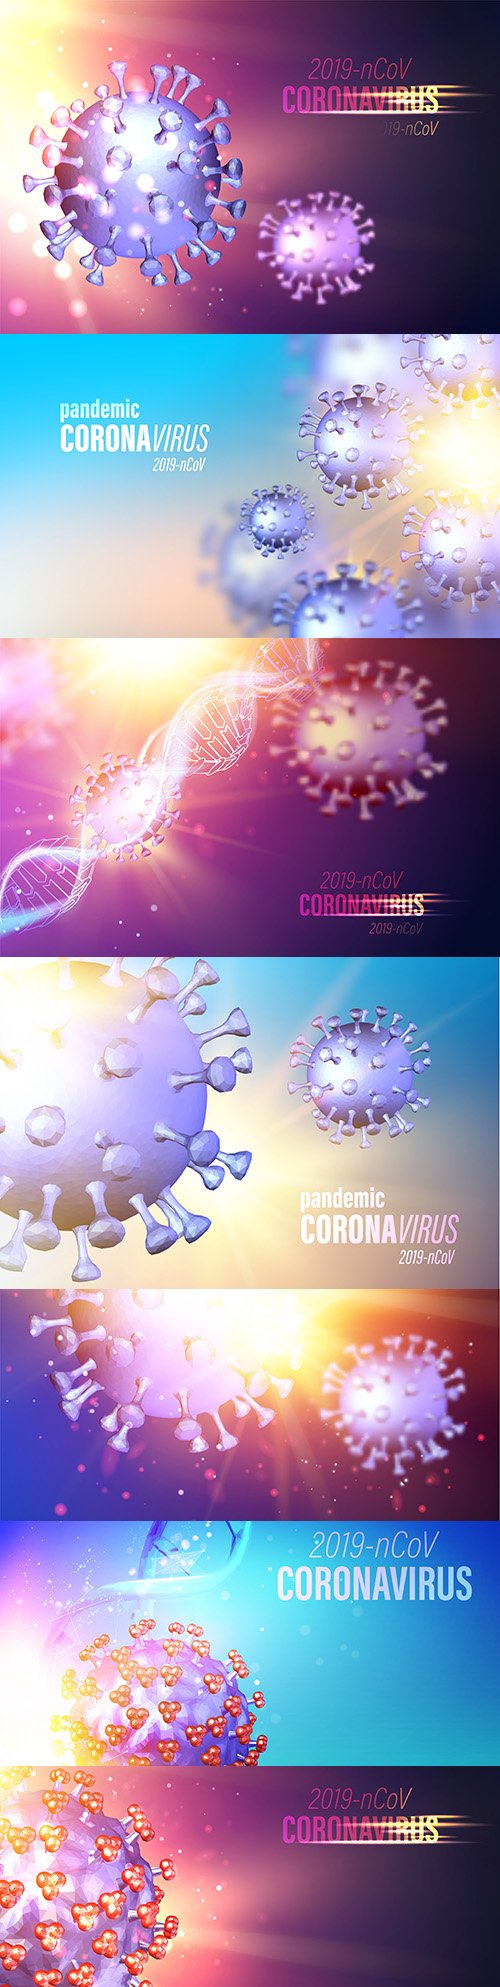 Computer model of coronavirus bacteria in futuristic rays